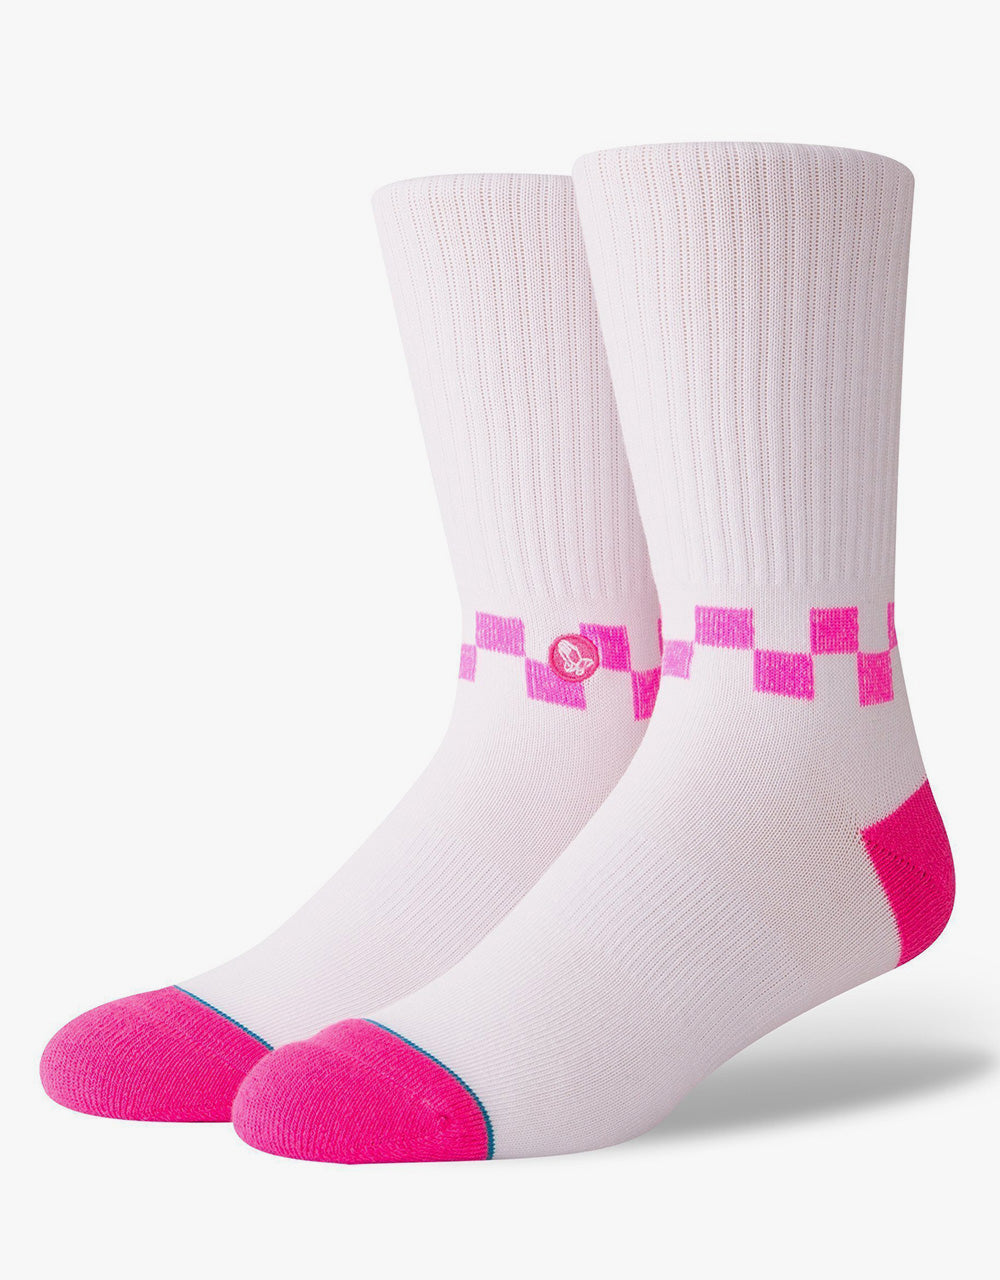 Stance Checkness Crew Socks - Neon Pink